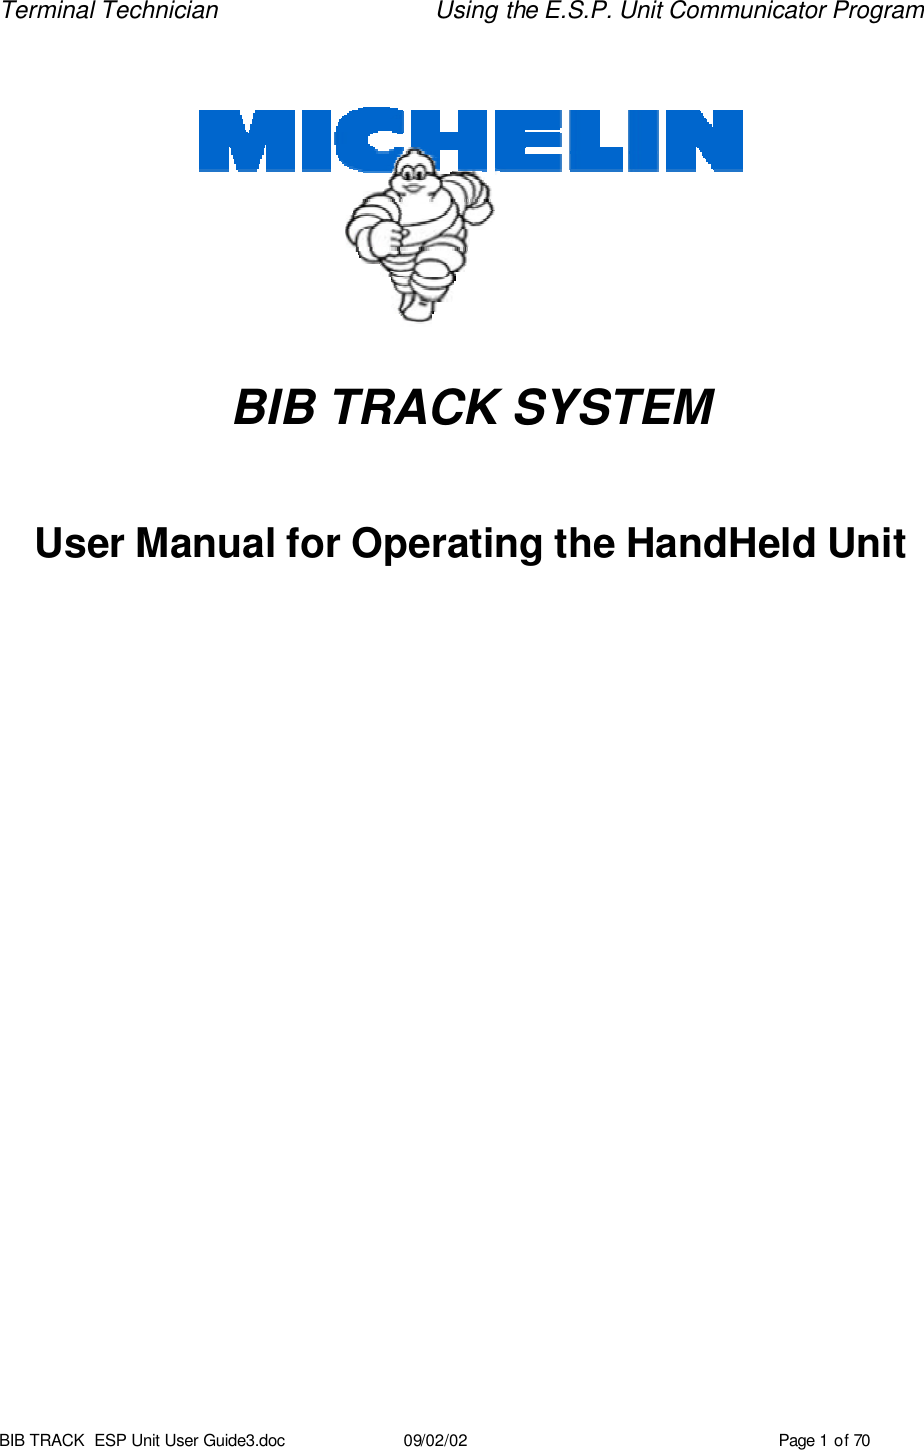 Terminal Technician Using the E.S.P. Unit Communicator Program BIB TRACK  ESP Unit User Guide3.doc 09/02/02 Page 1 of 70     BIB TRACK SYSTEM    User Manual for Operating the HandHeld Unit     